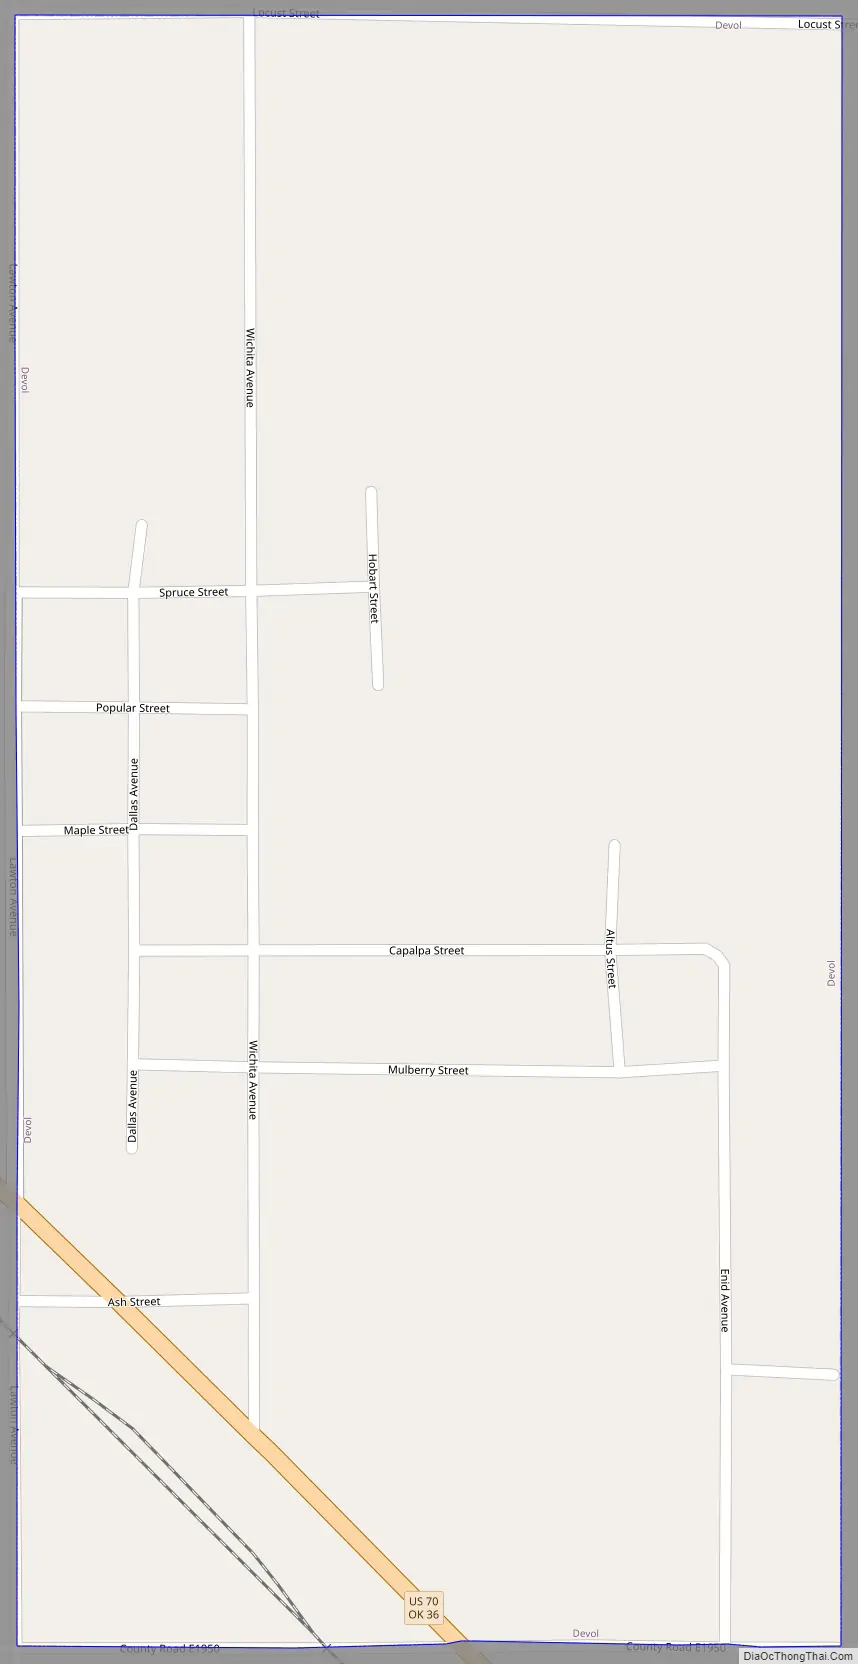 Map of Devol town